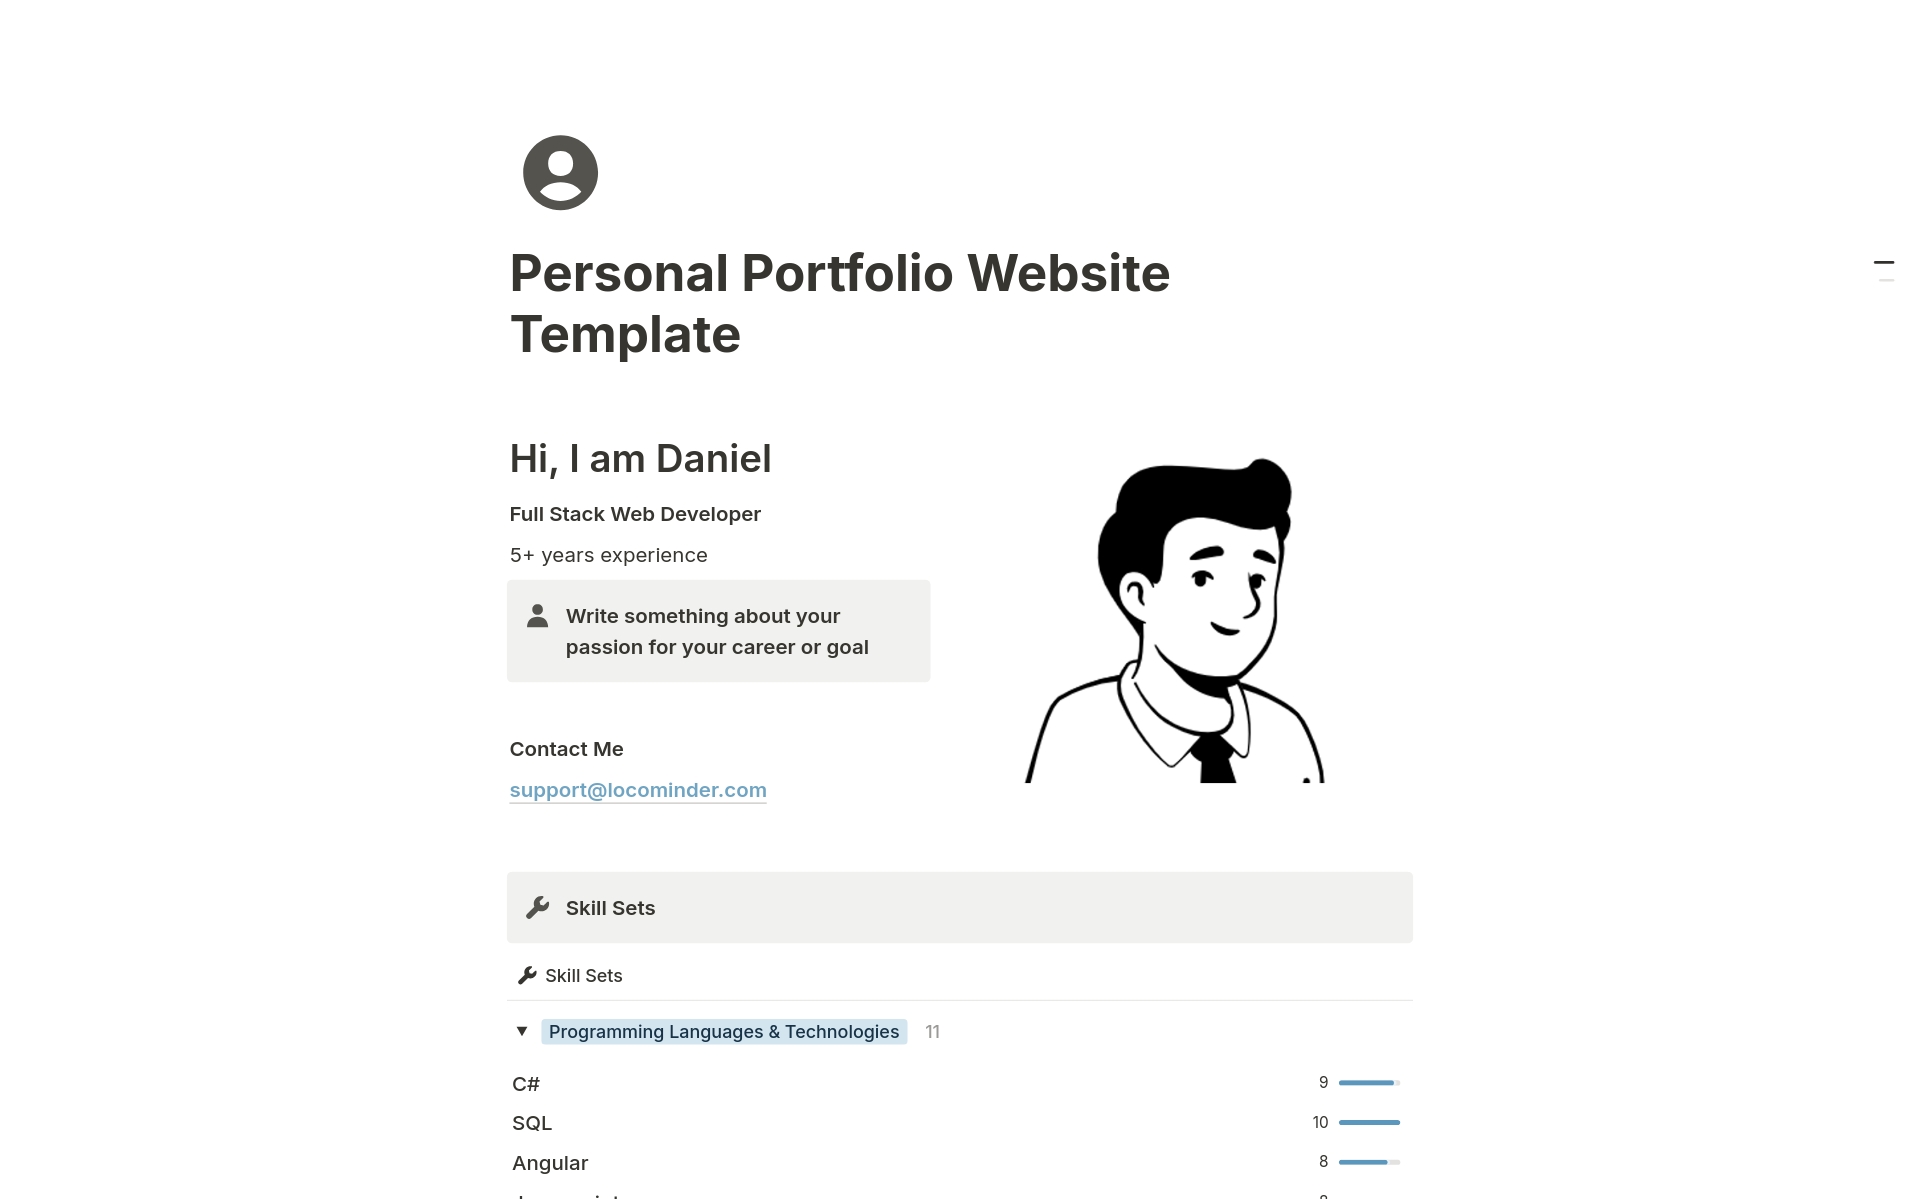 A template preview for Personal Portfolio Website